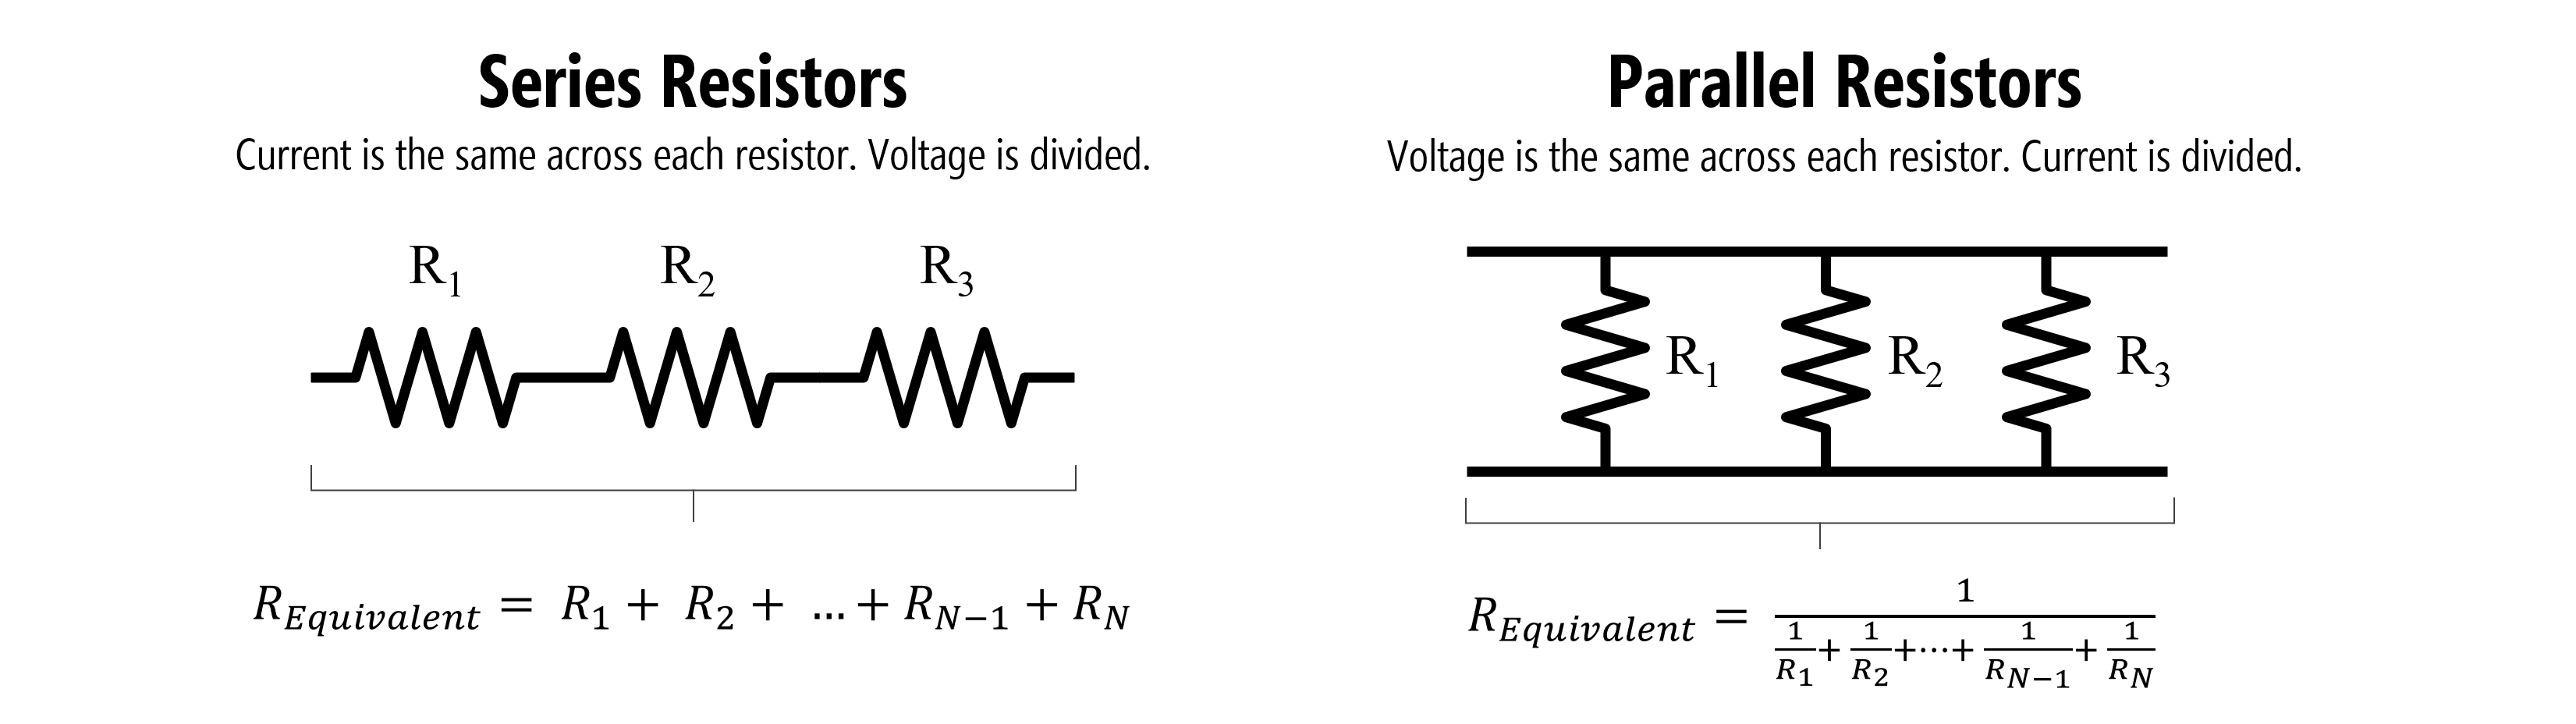 Series vs parallel resistance.png